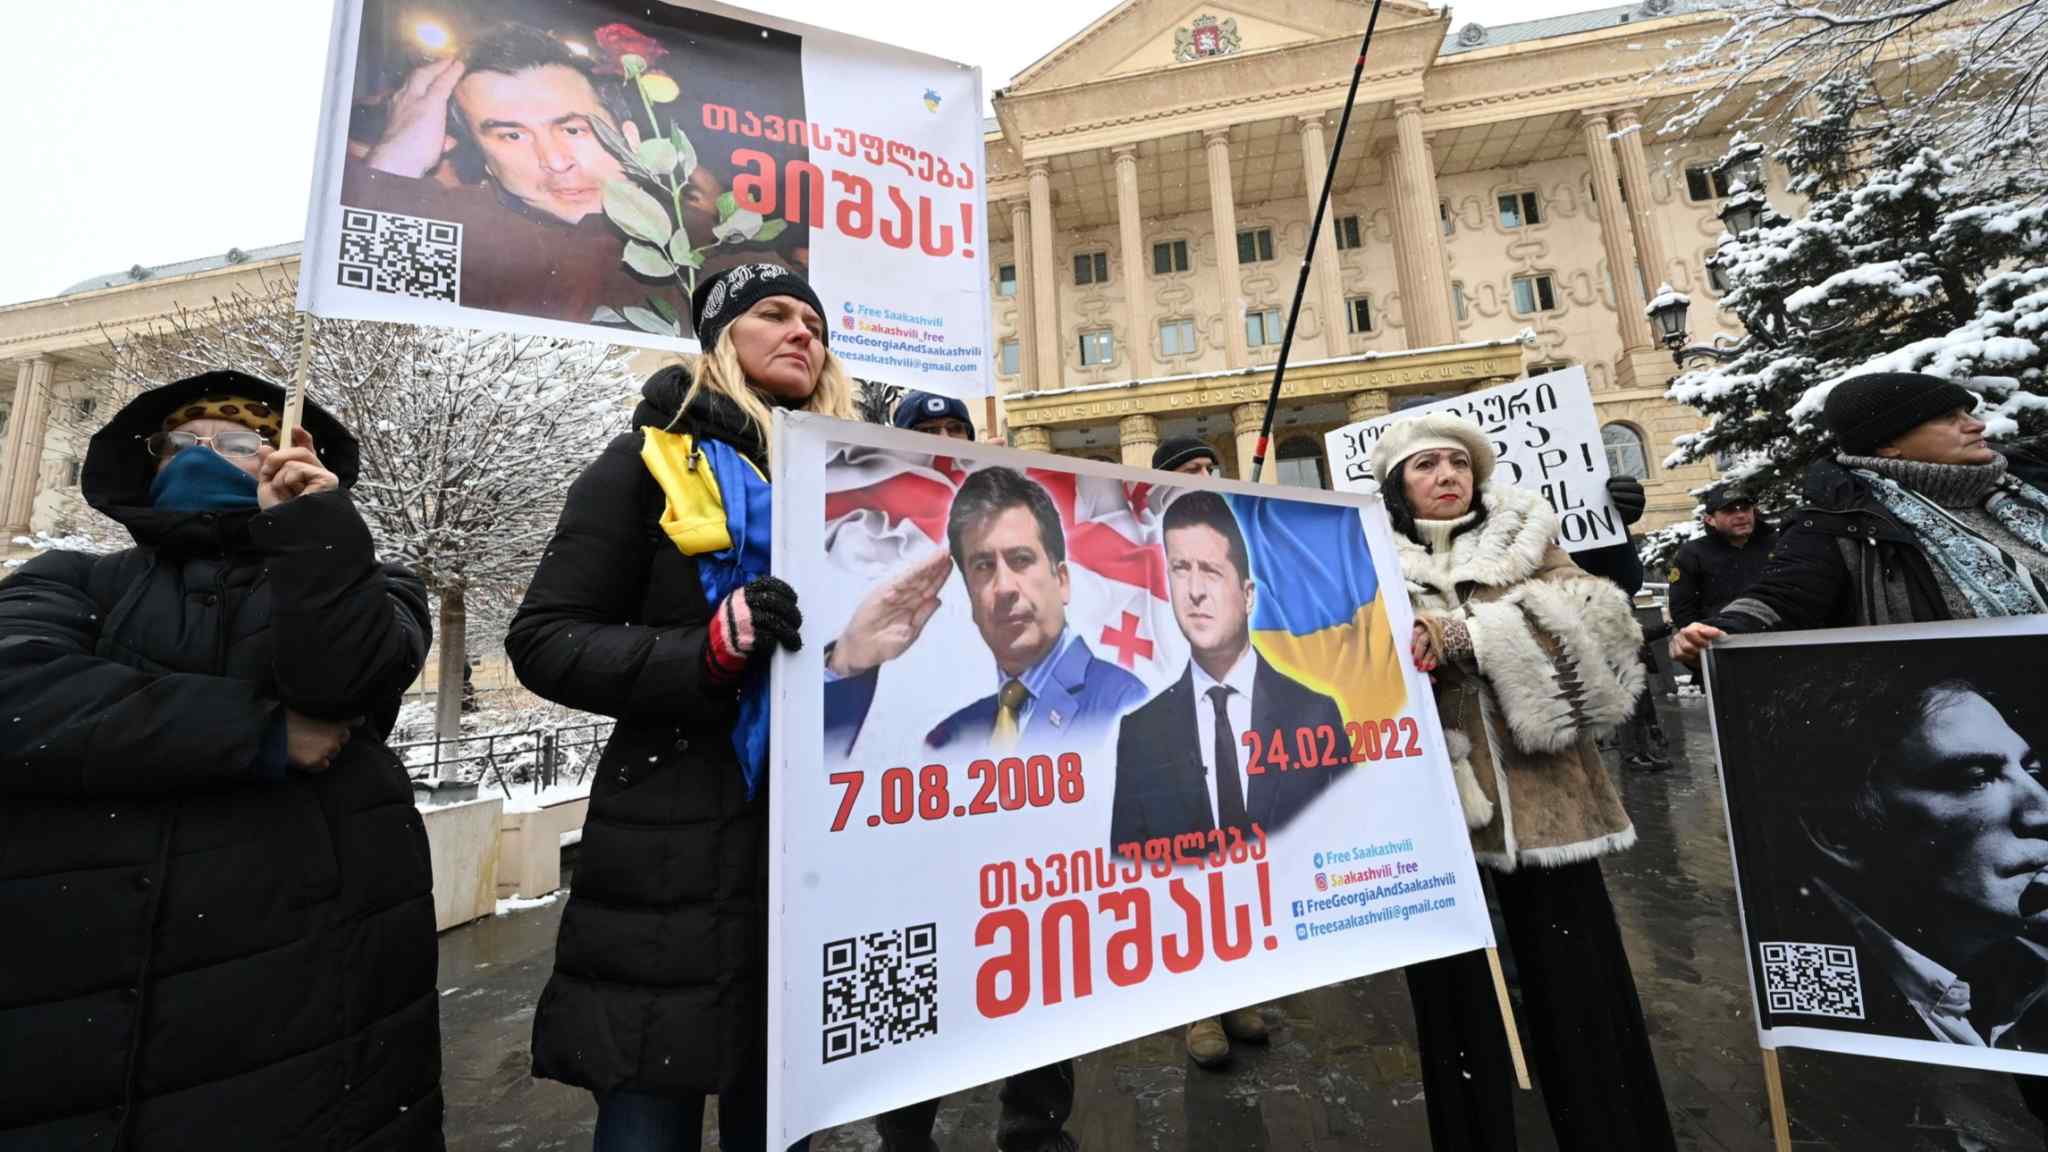 Plight of Saakashvili casts shadow on Georgia’s EU aspirations